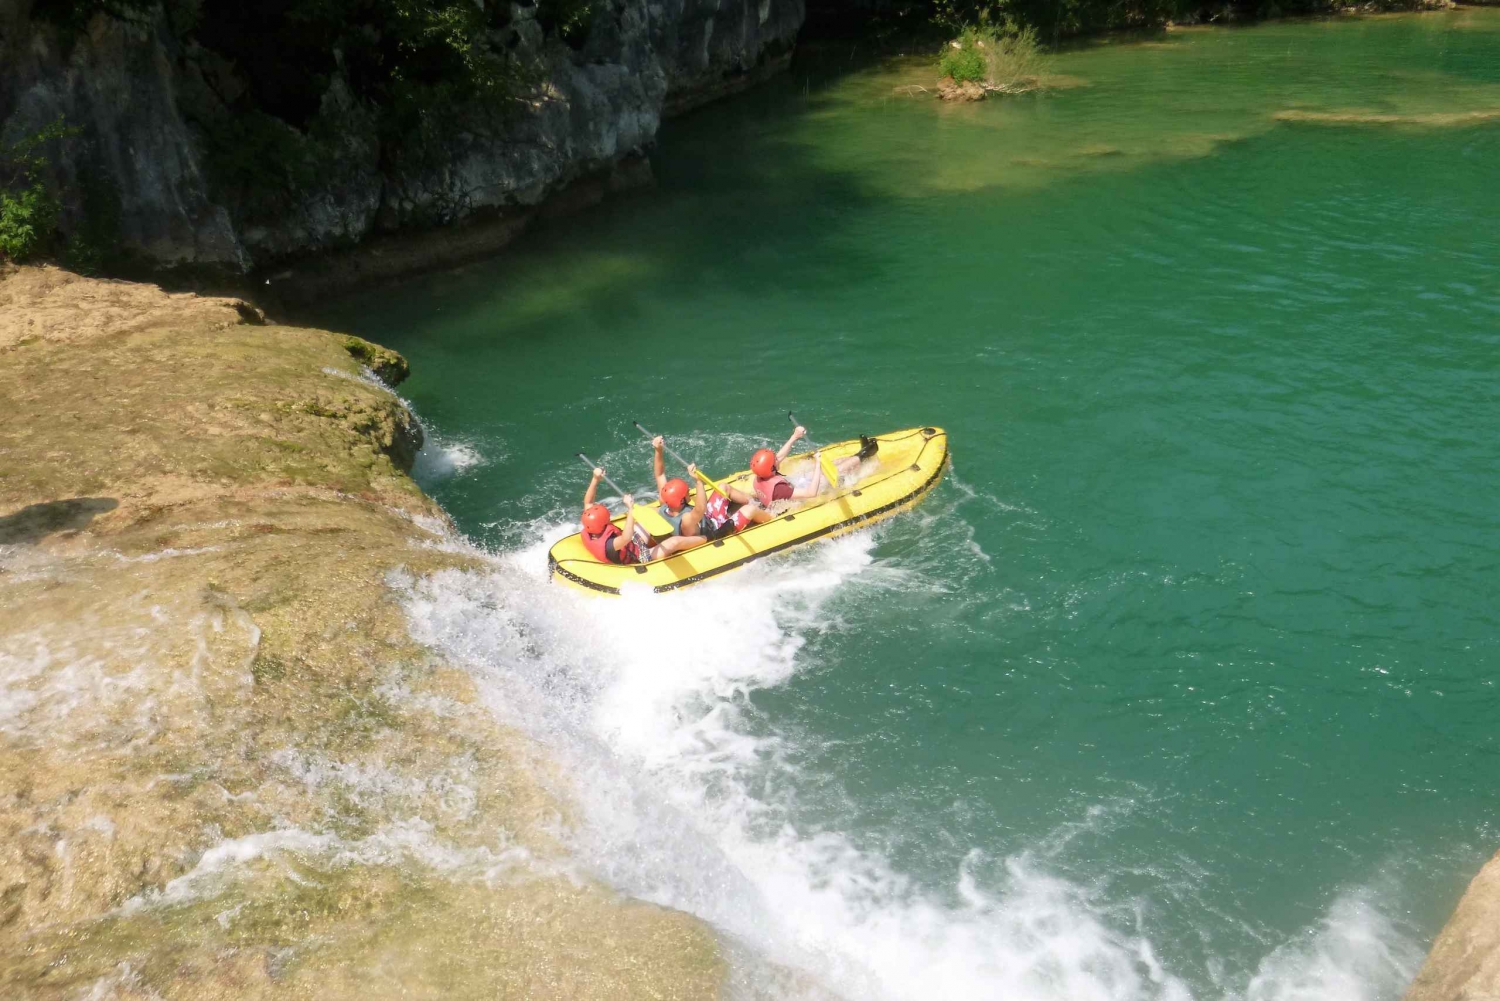 Slunj: Kayaking on the Upper River Mreznica